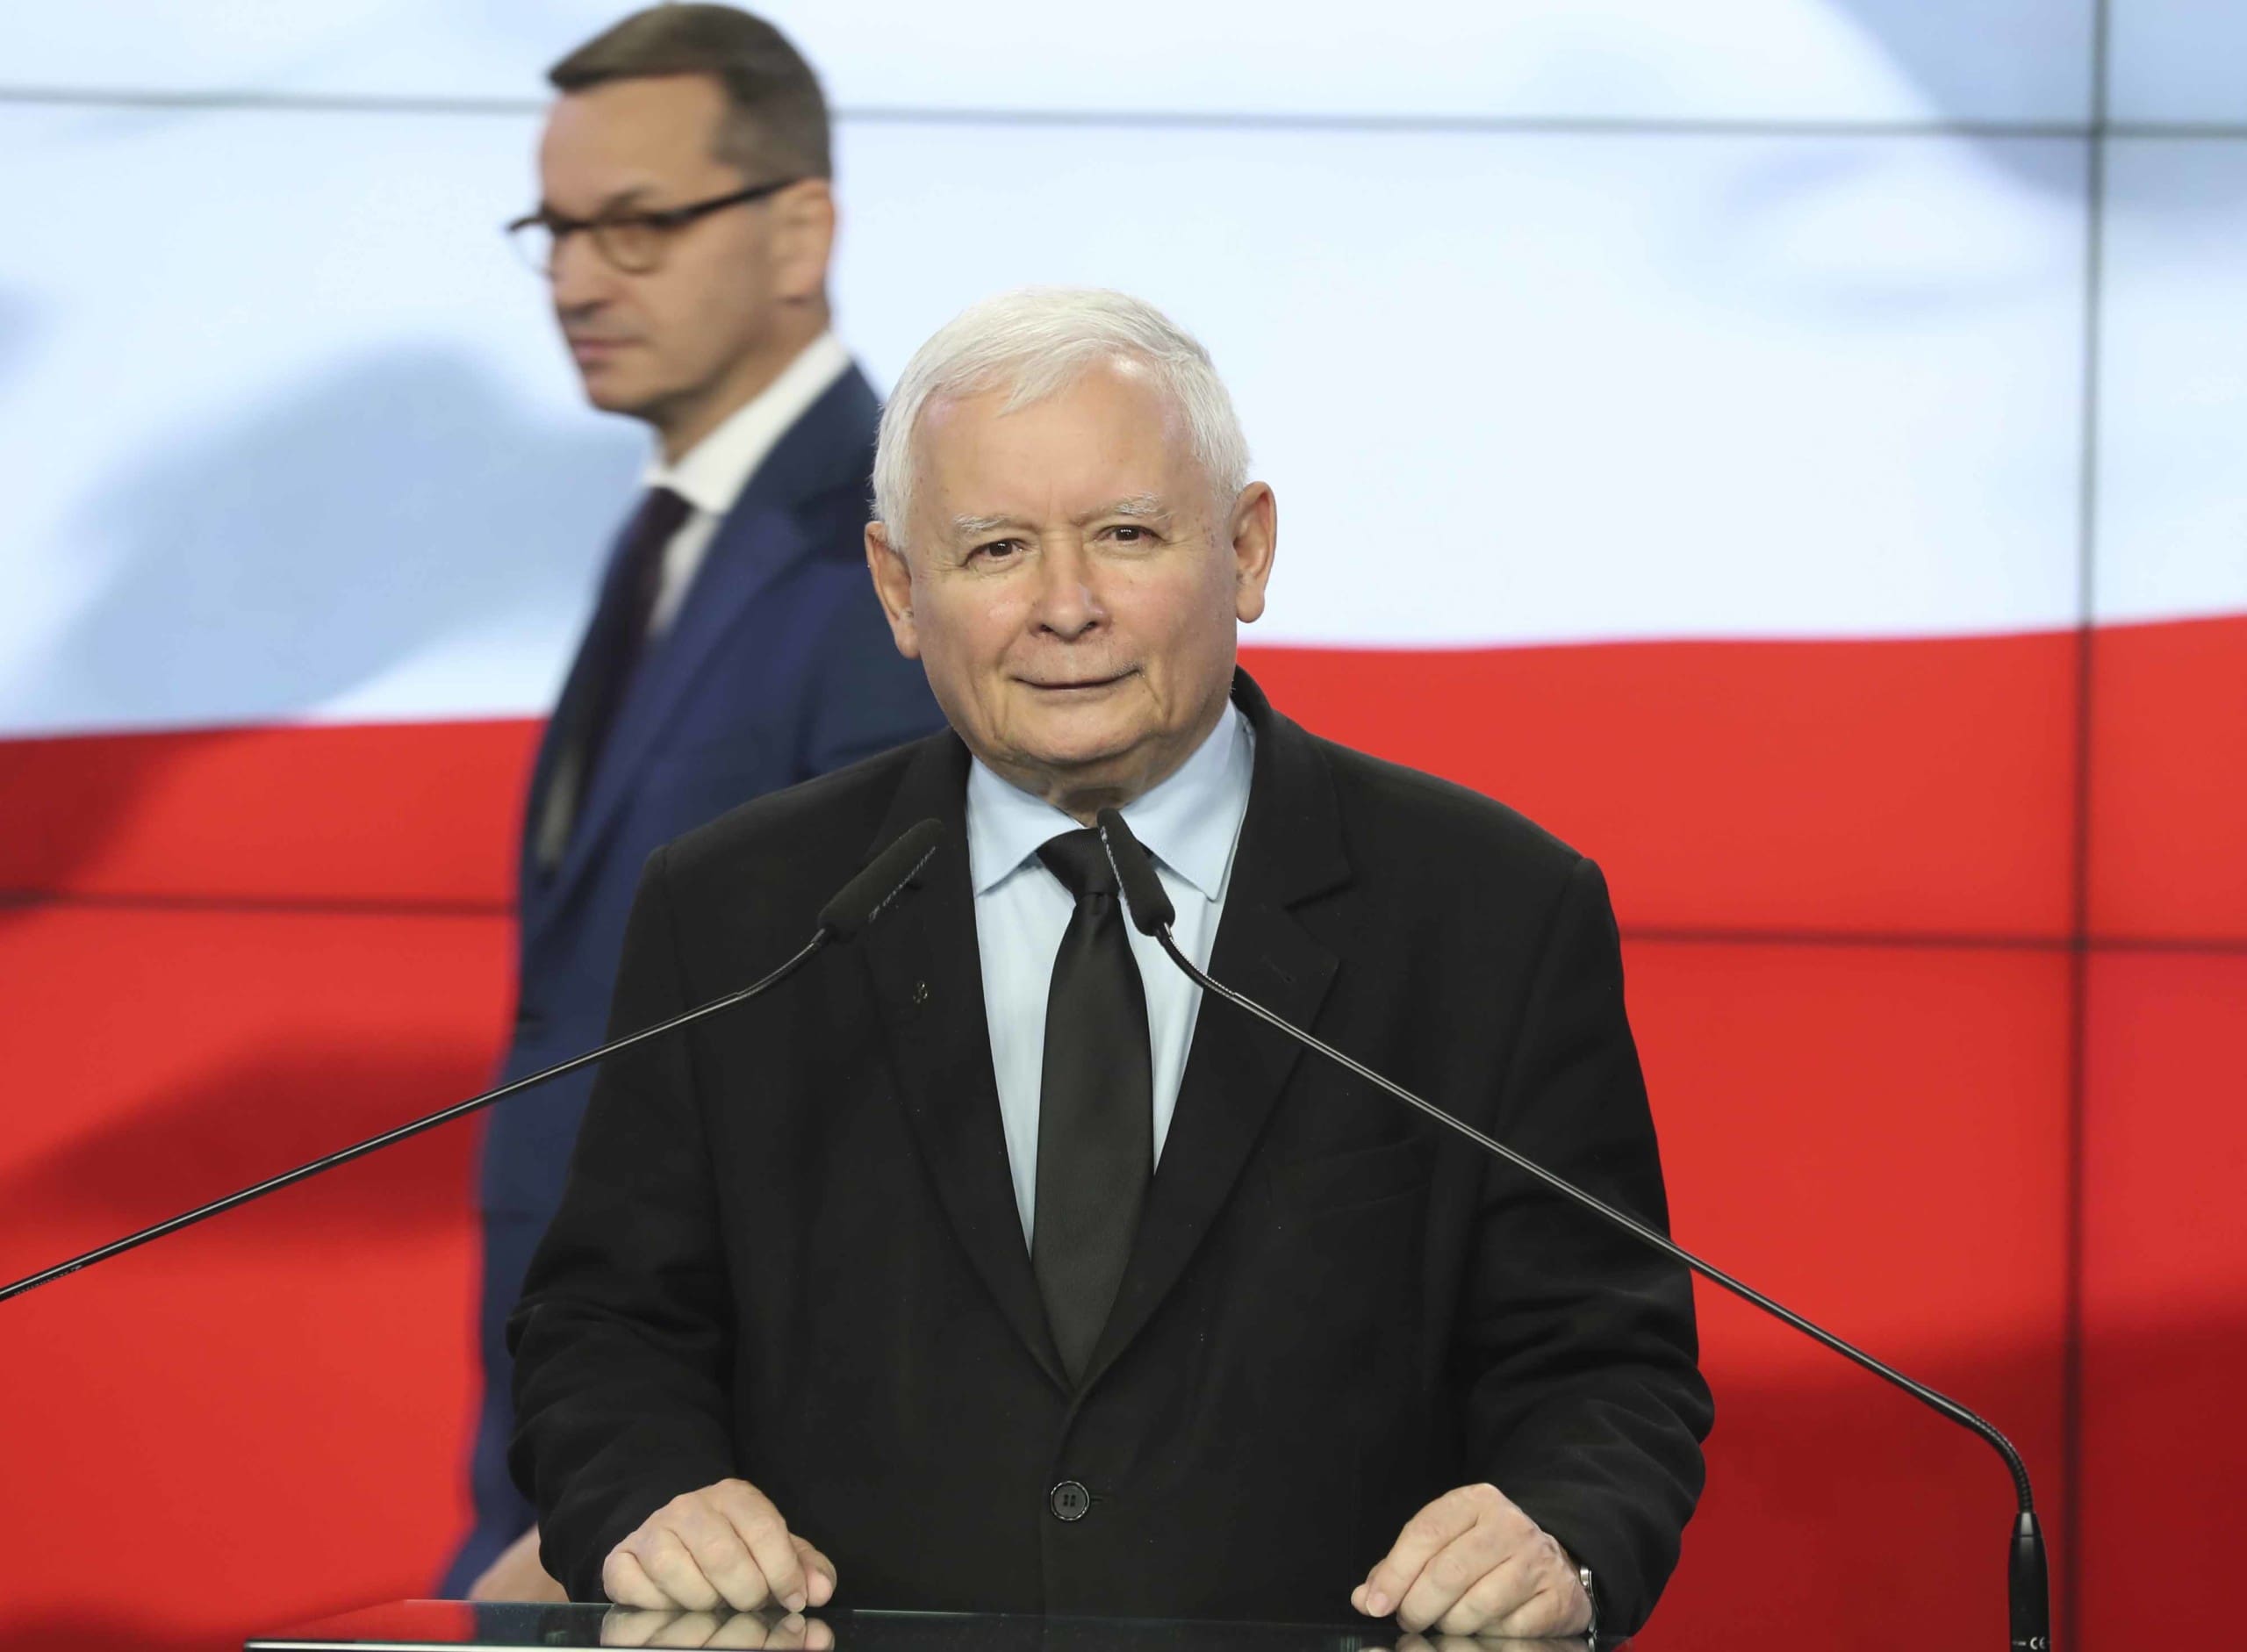 Kaczyński Morawiecki Poland United Right